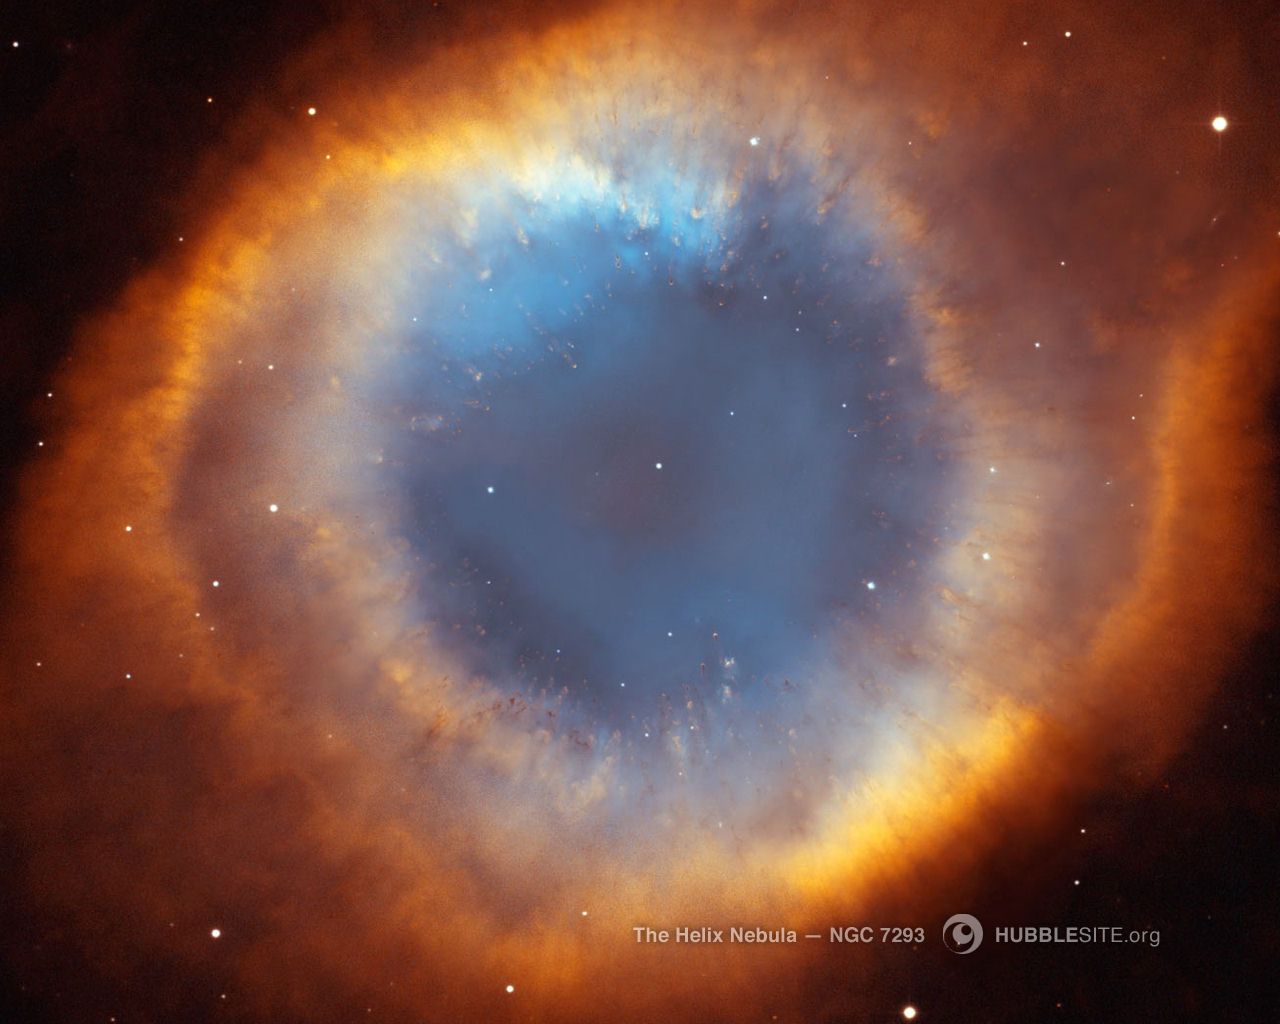 Free desktop wallpaper, The Helix Nebula, nice space photo